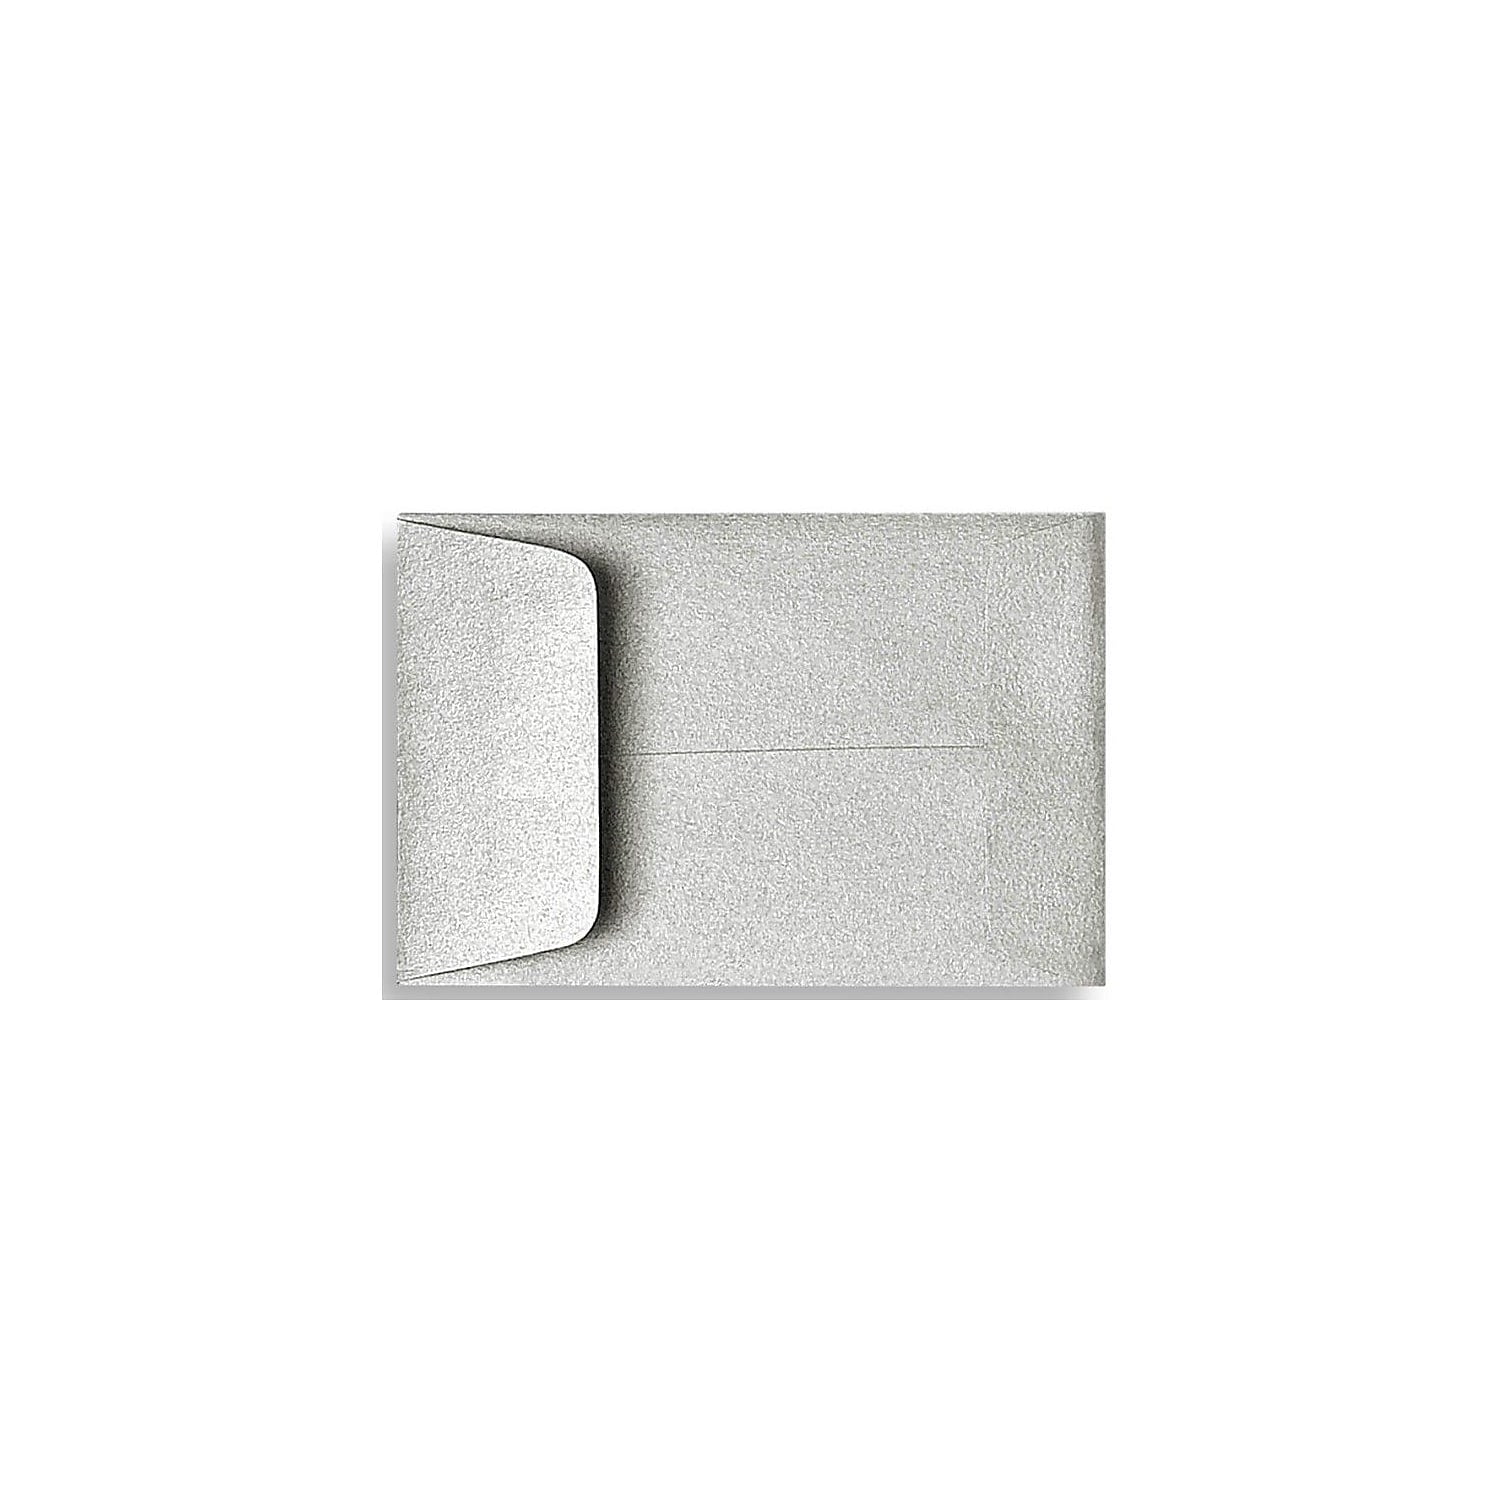 LUXPaper #1 Coin Envelopes, 2 1/4 x 3 1/2, Glassine